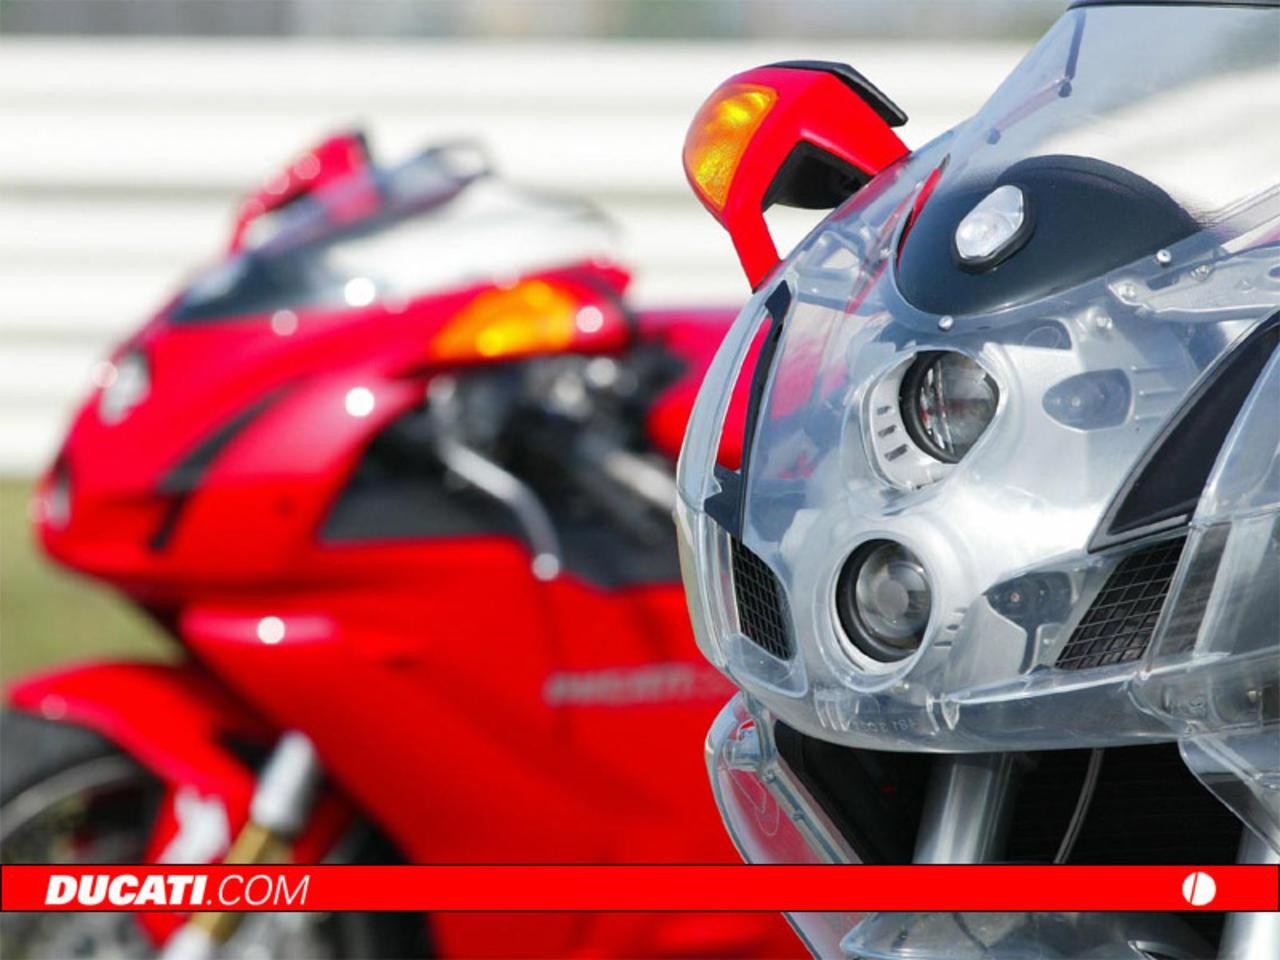 General 1280x960 Ducati motorcycle vehicle Red Motorcycles Volkswagen Group Italian motorcycles